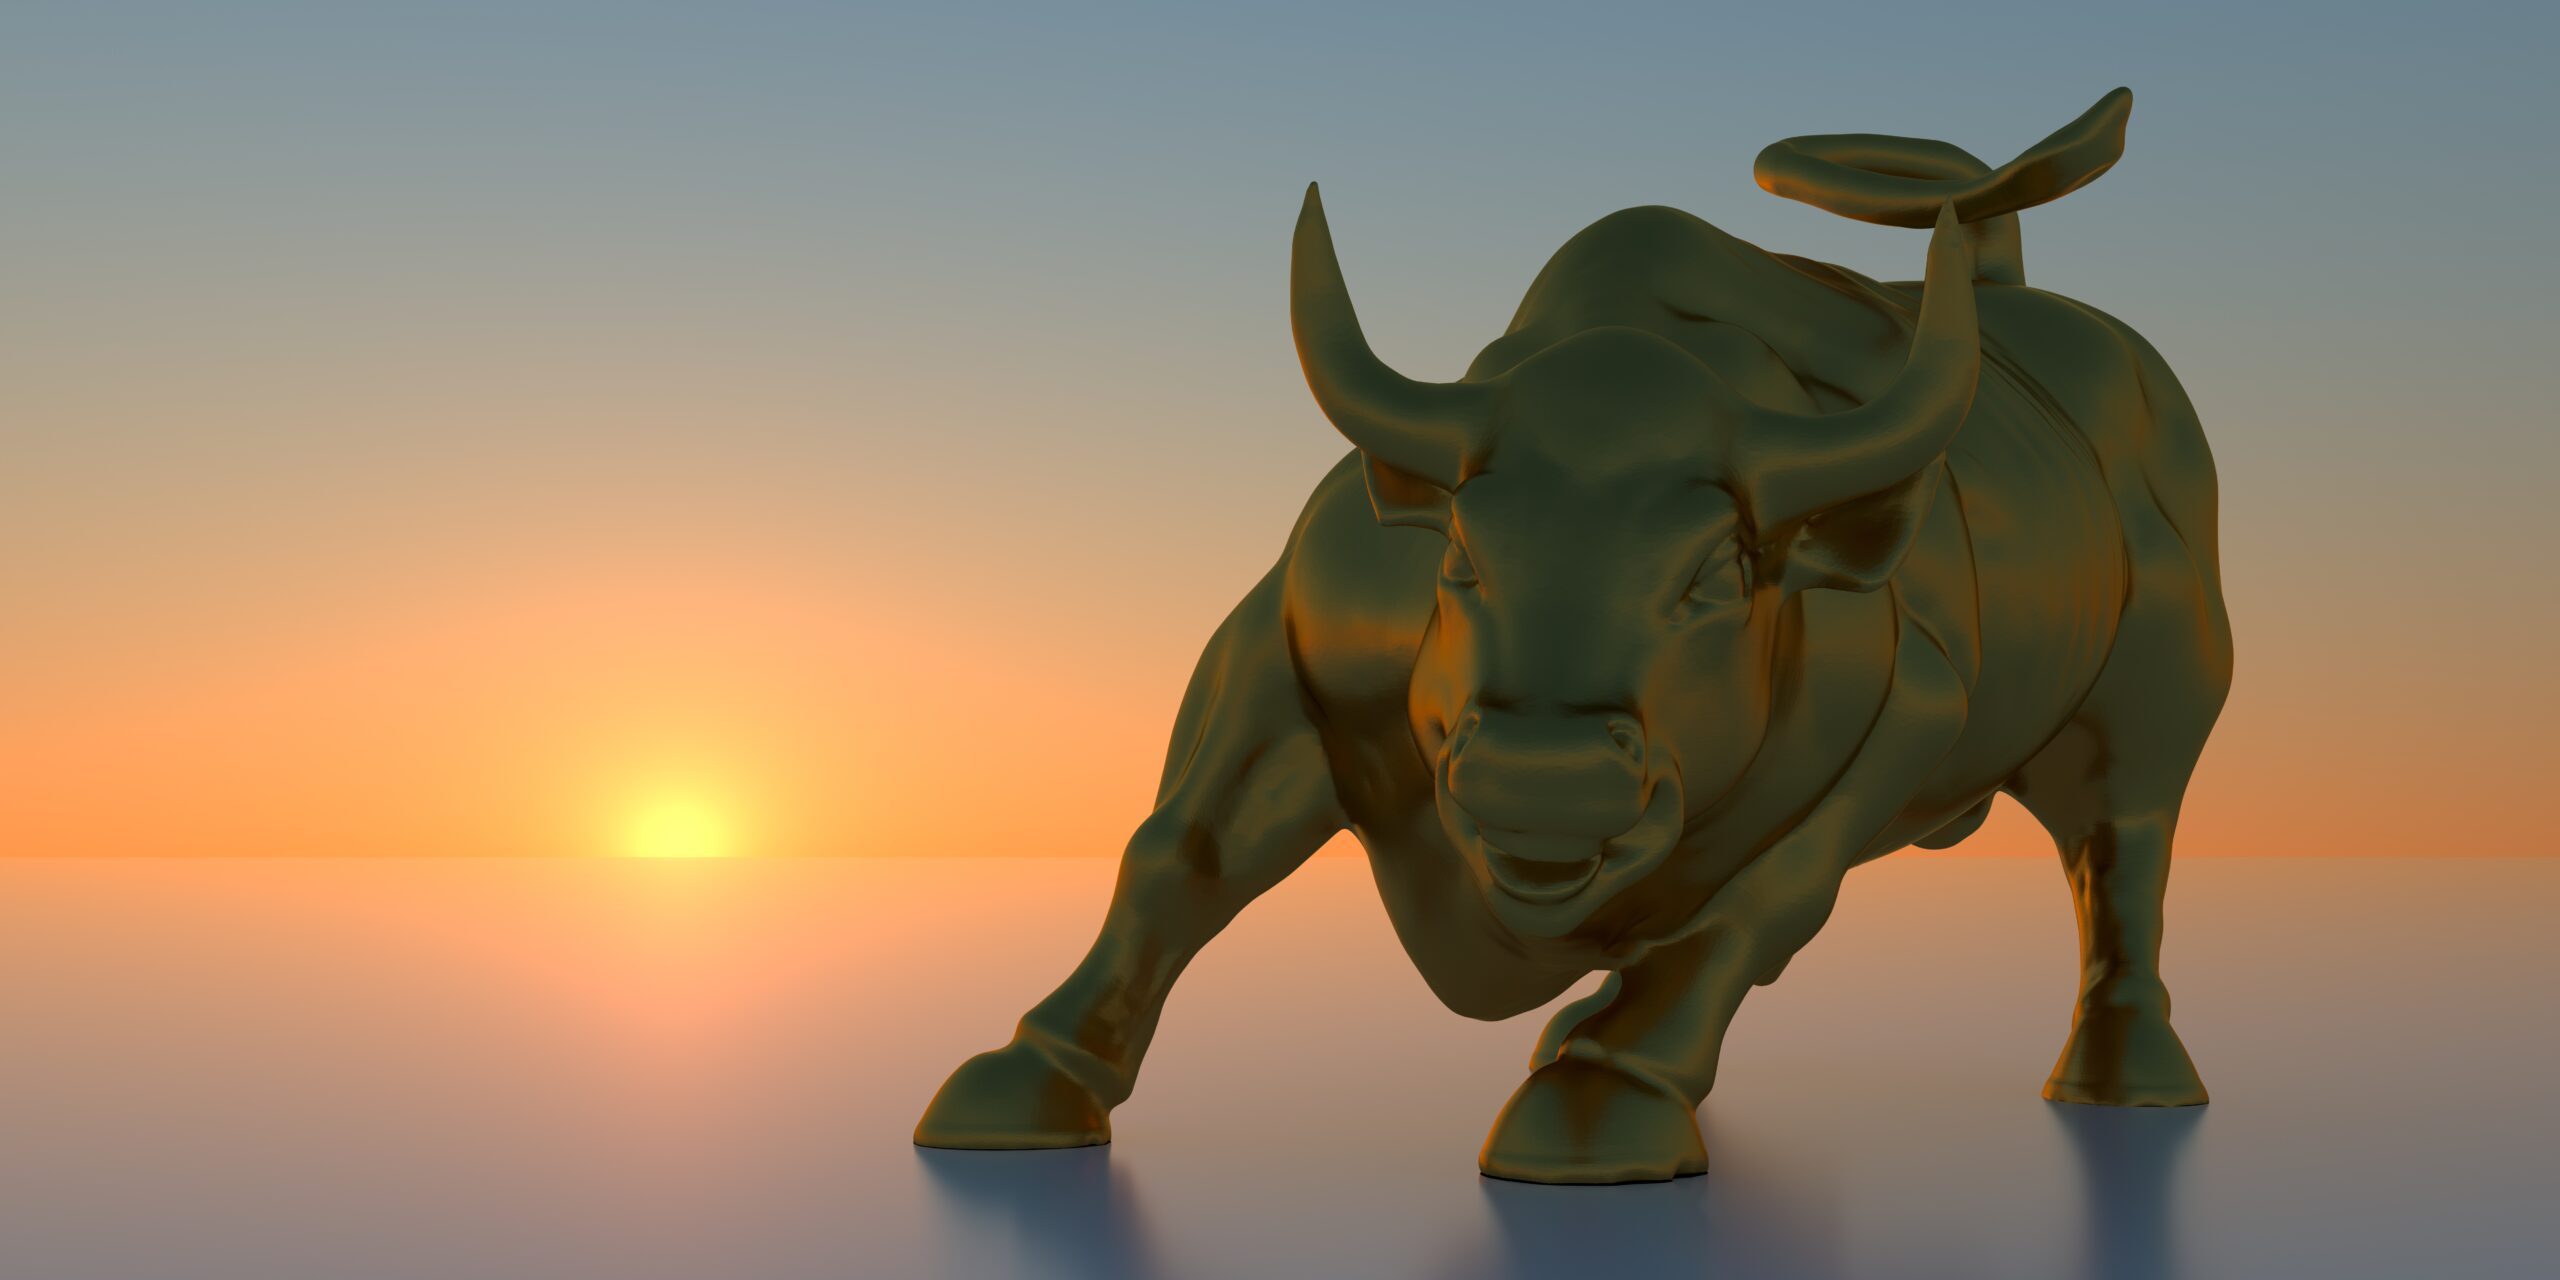 Charging Bull Wall Street Bull 3D illustration of the Bowling Gr